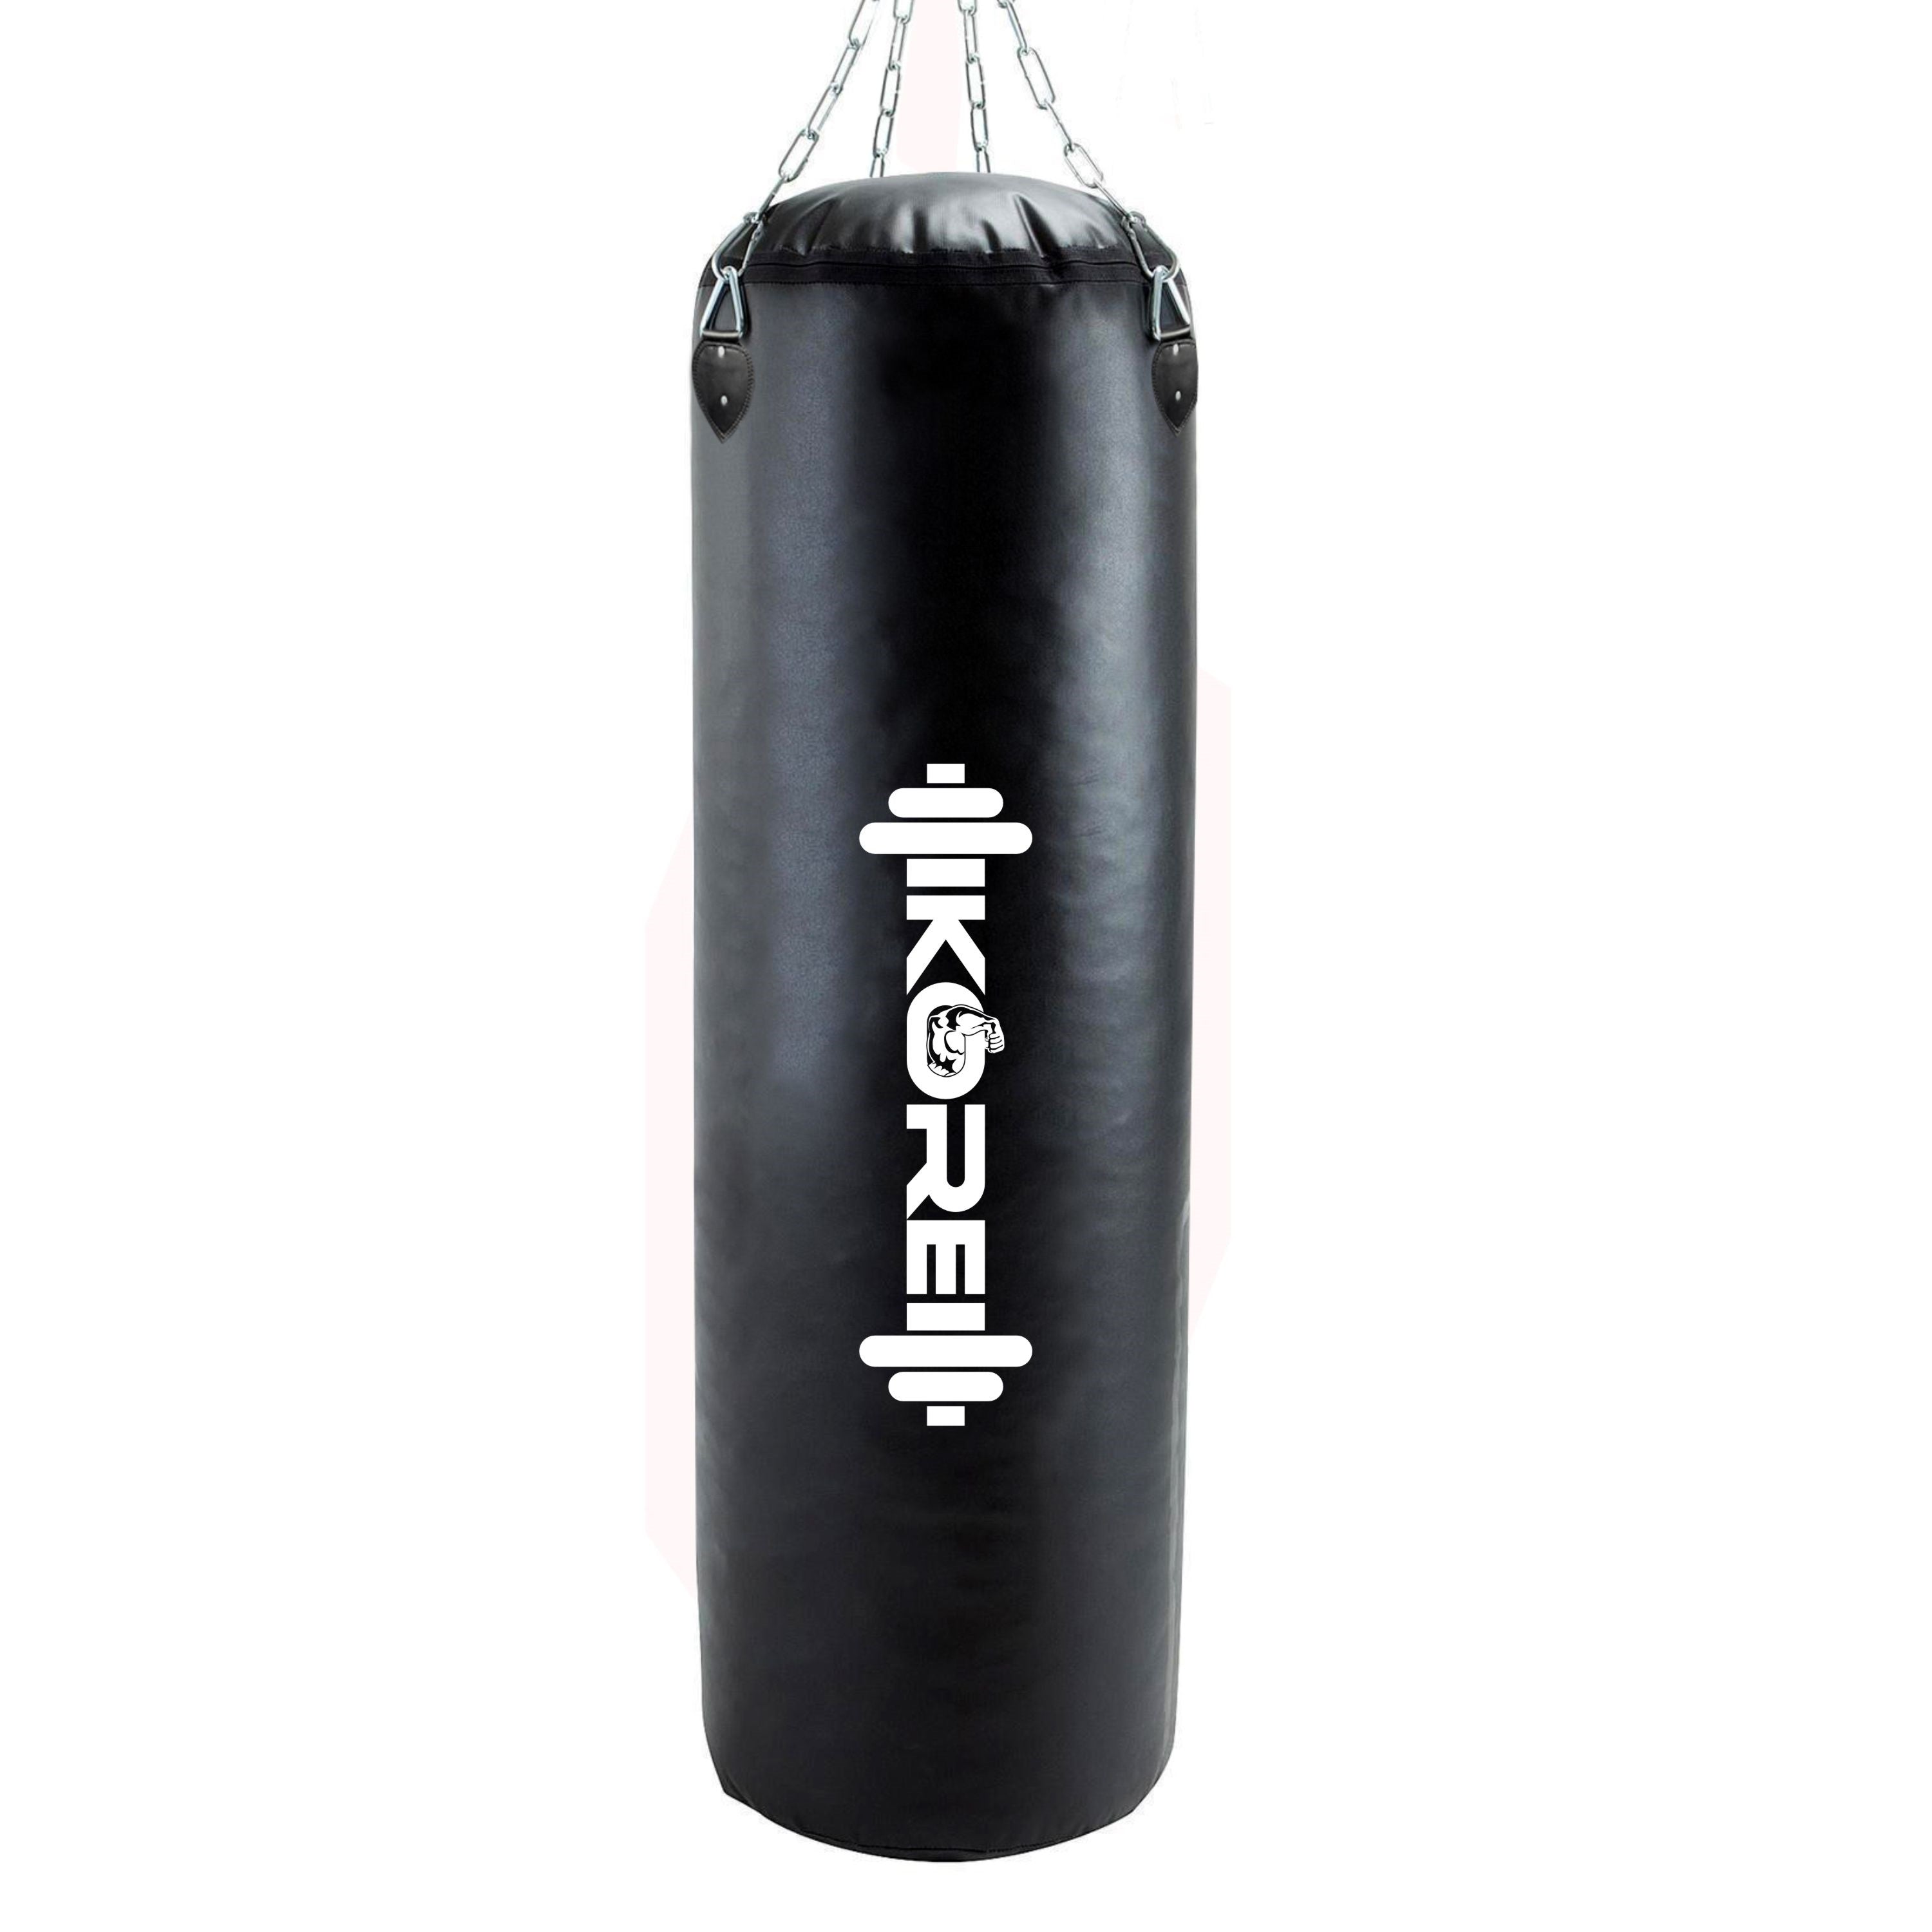 Rival Pro Wrecking Ball Heavy Bag 100lb/45kg – Rival Boxing Gear USA